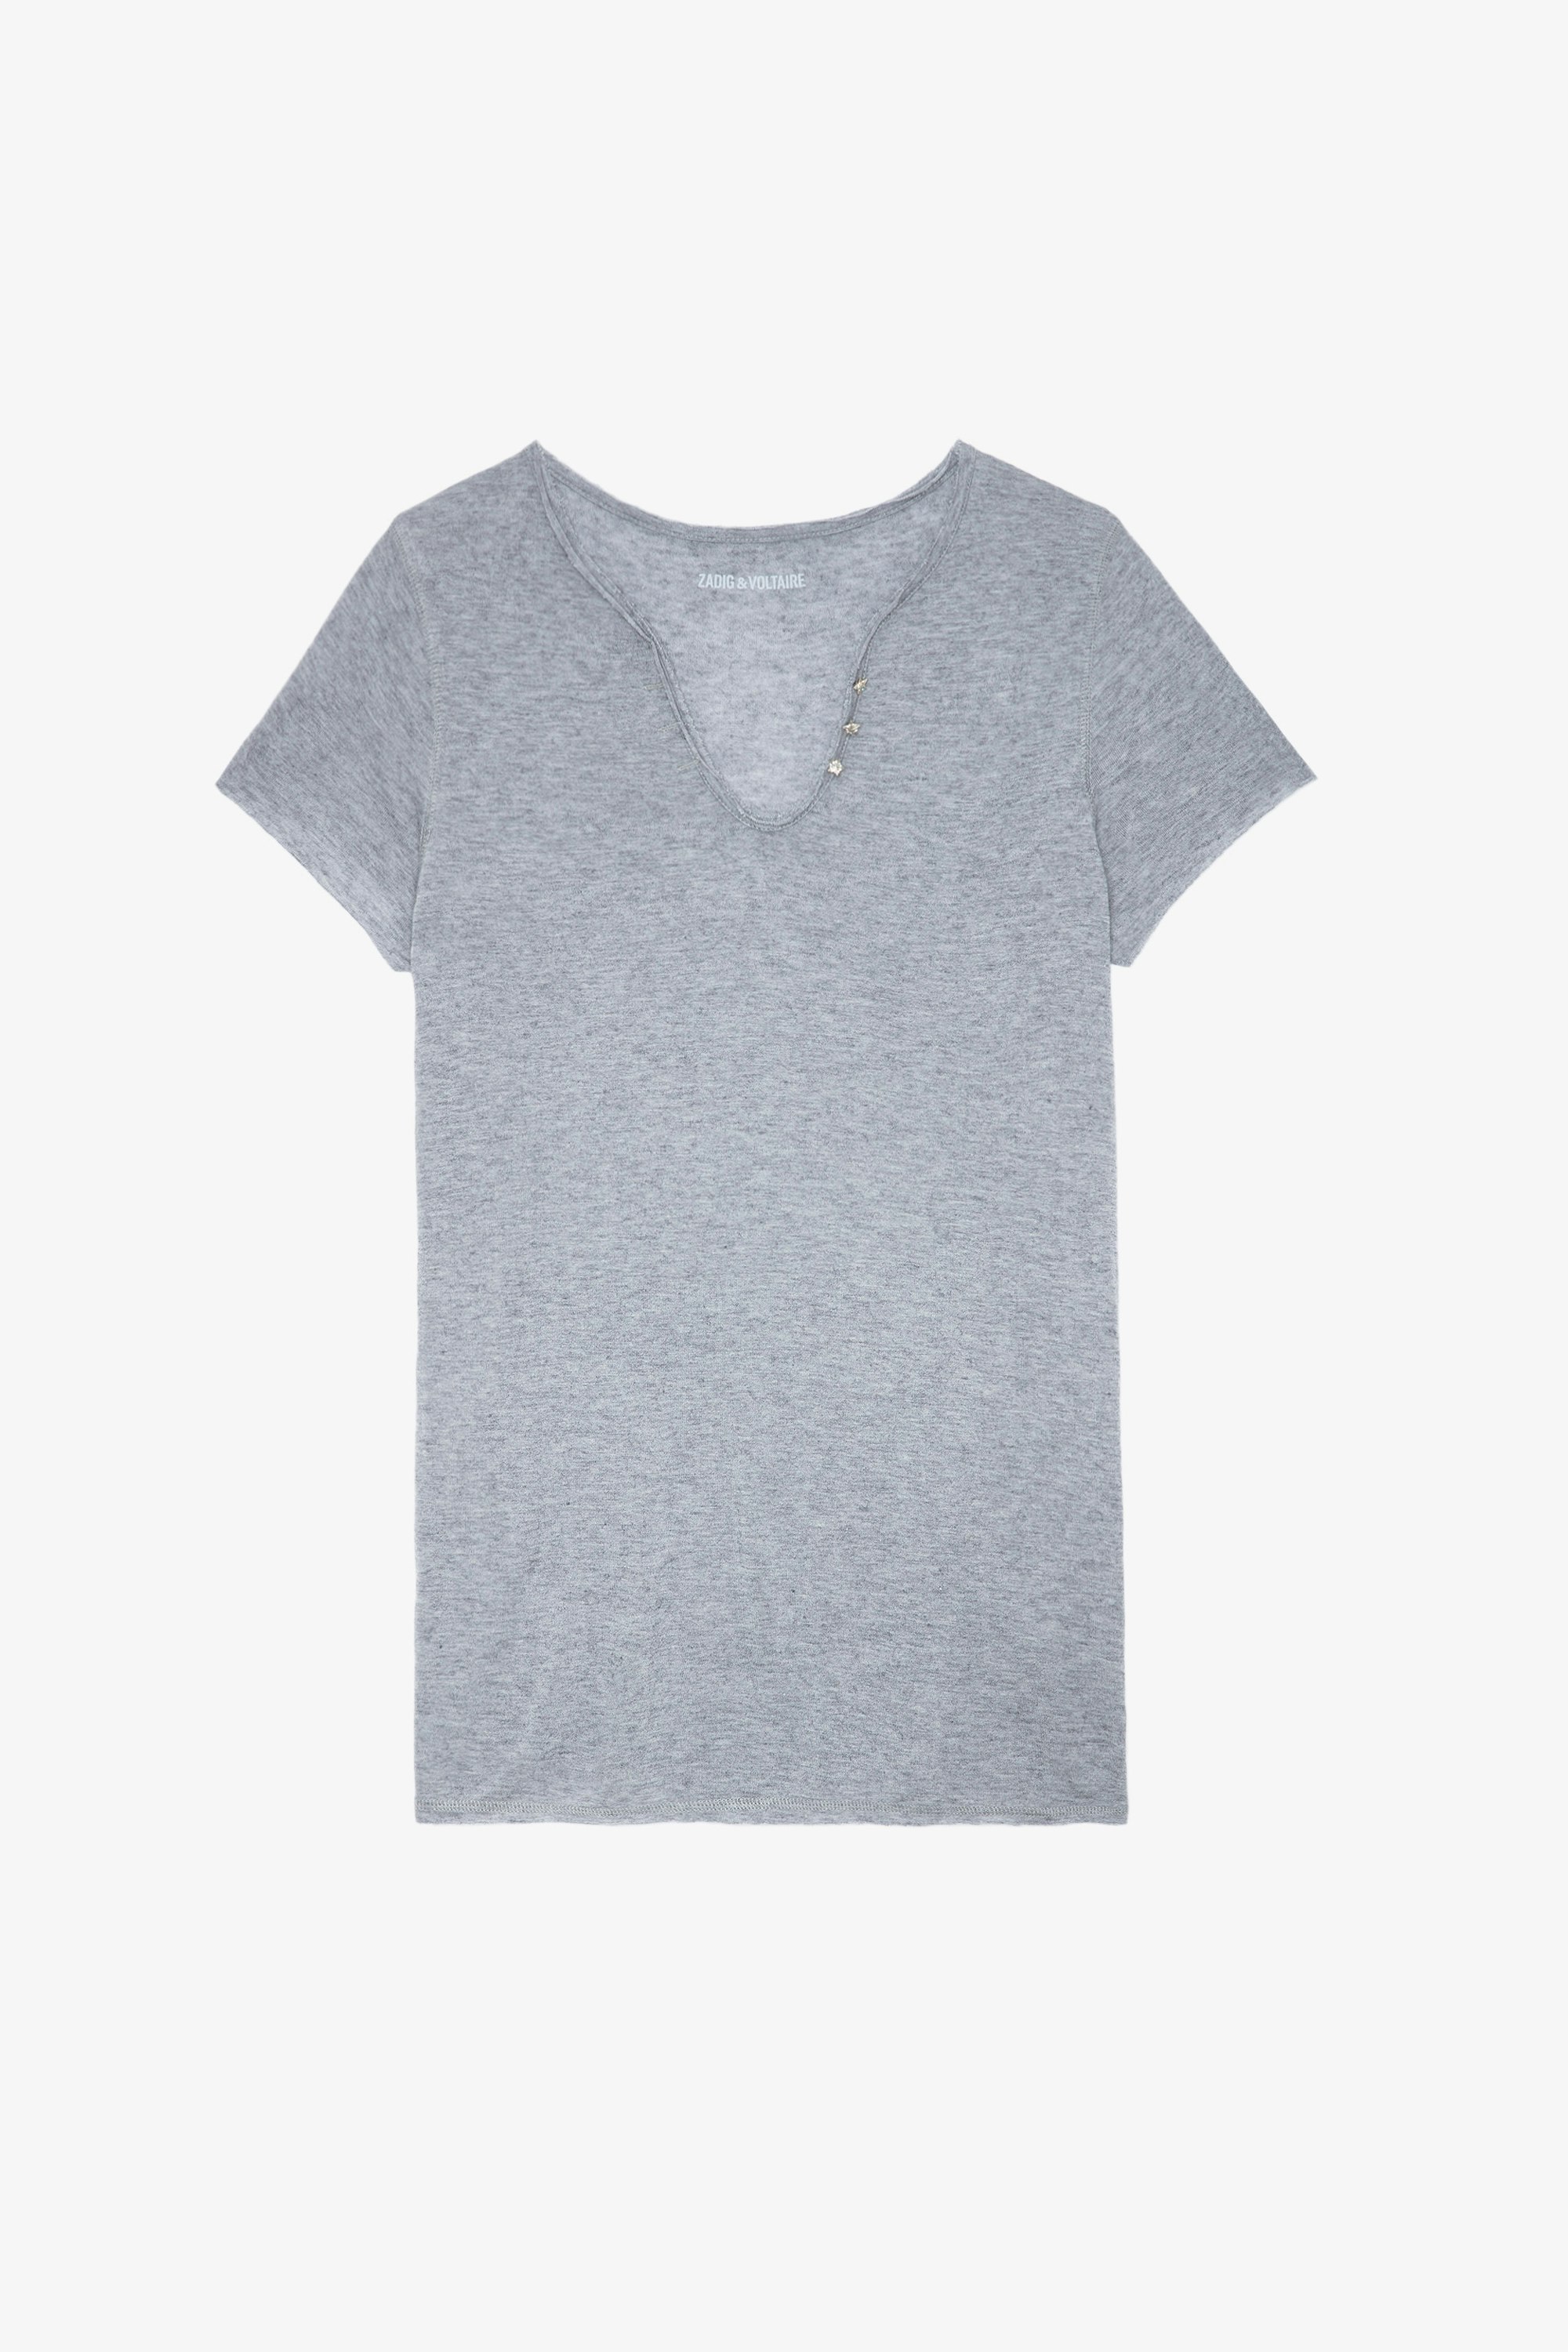 Jewellery Henley T-Shirt - Women’s marl grey Henley T-shirt with jewellery buttons.